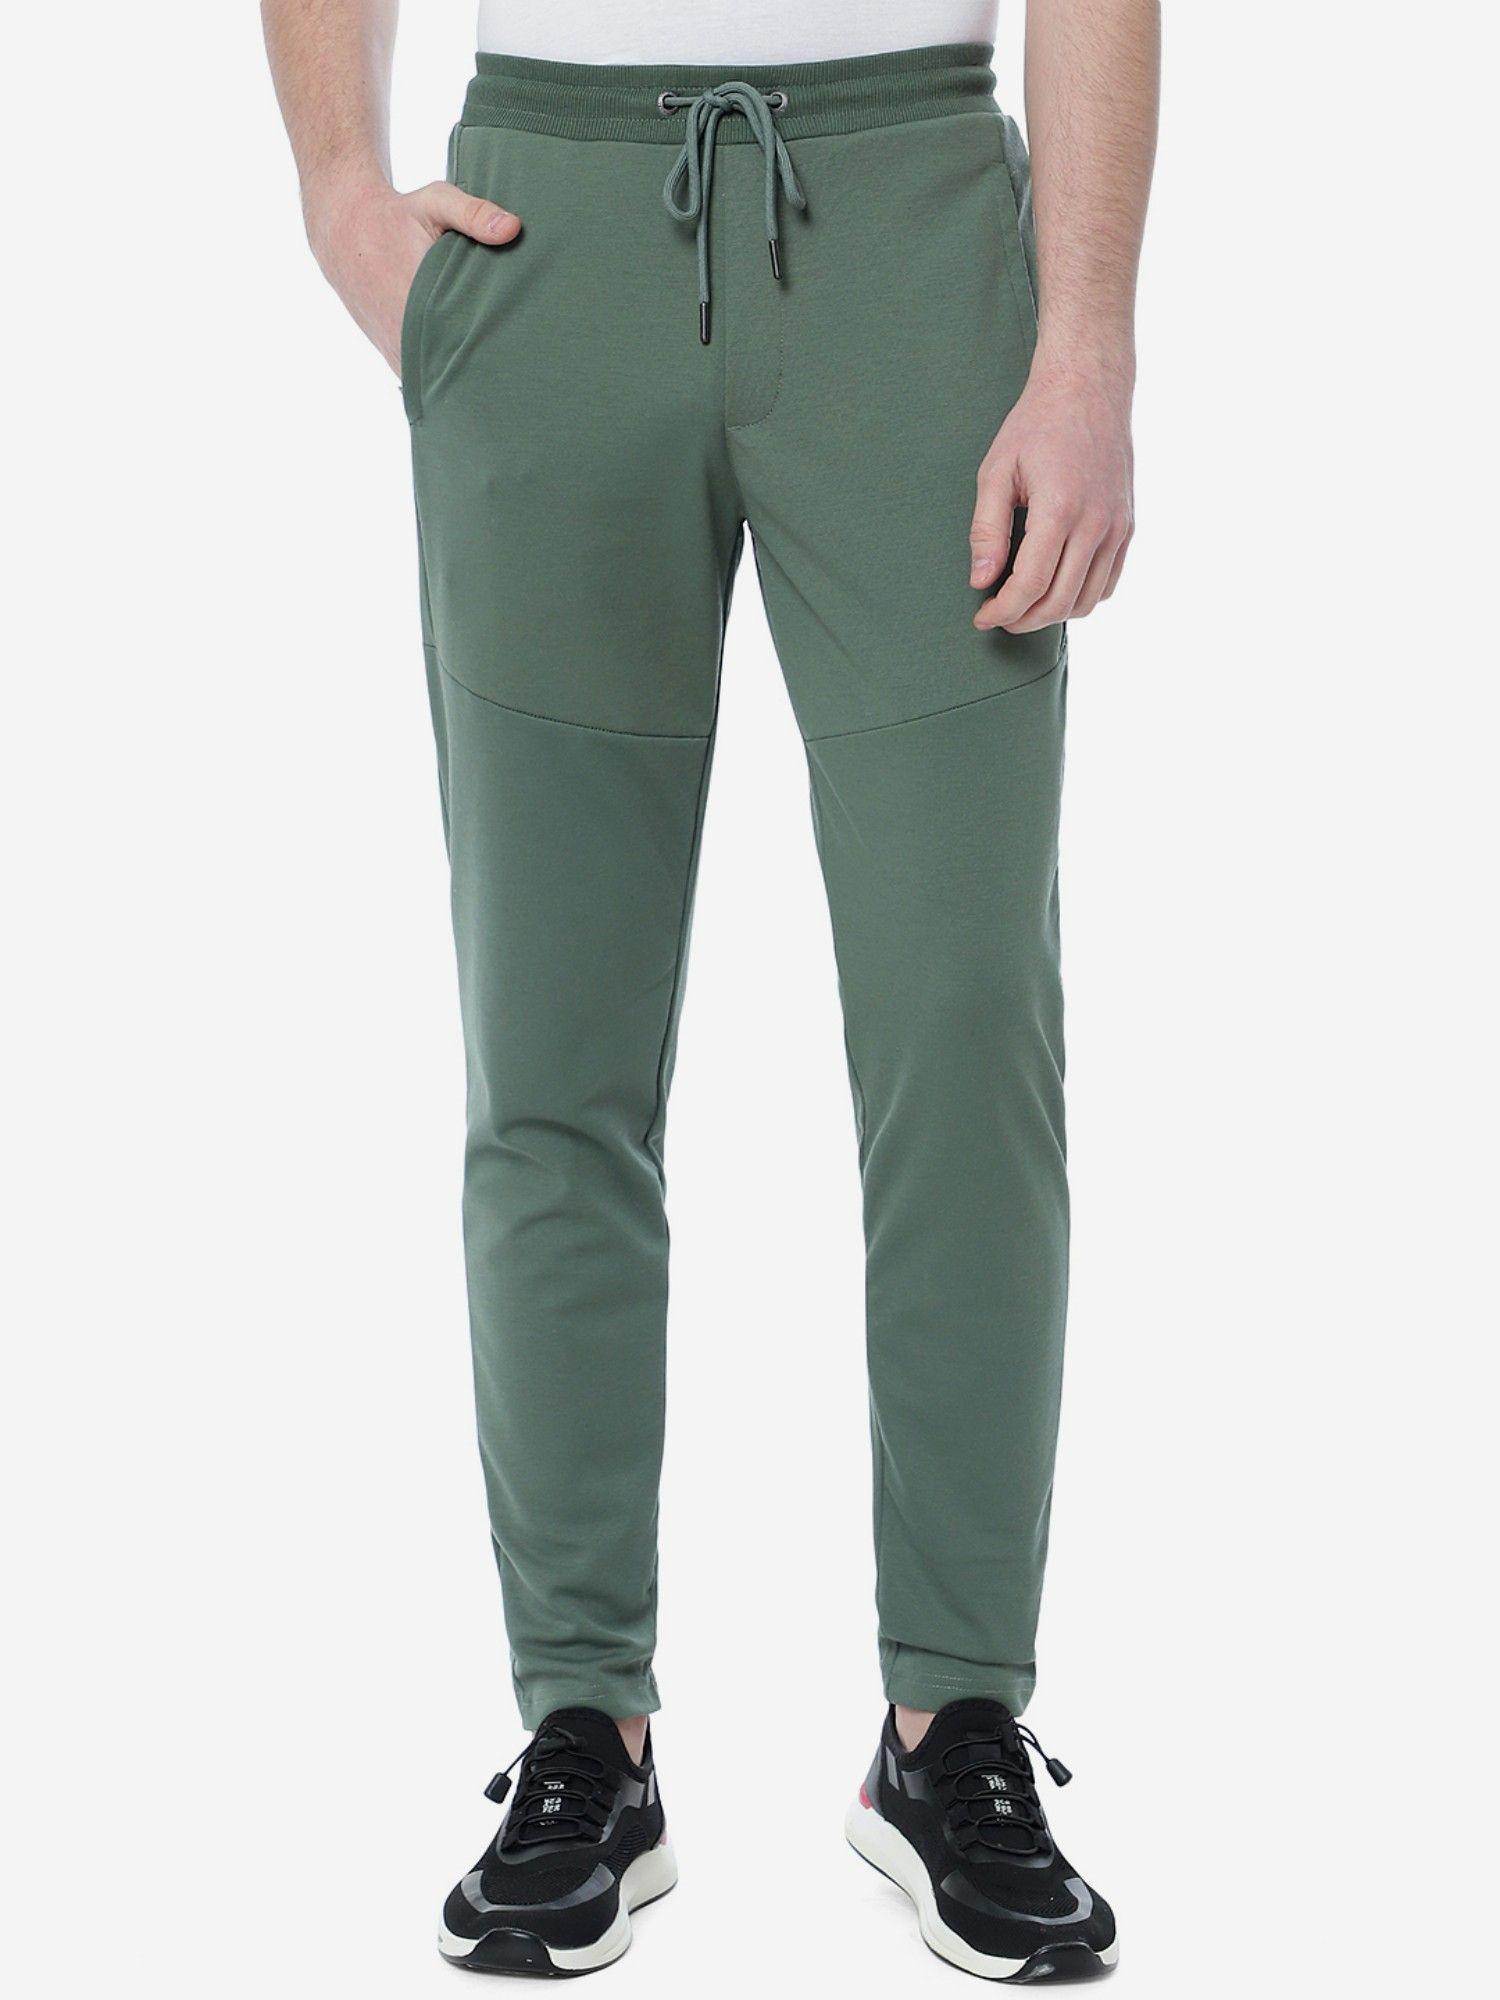 men-spruce-green-solid-slim-fit-track-pant